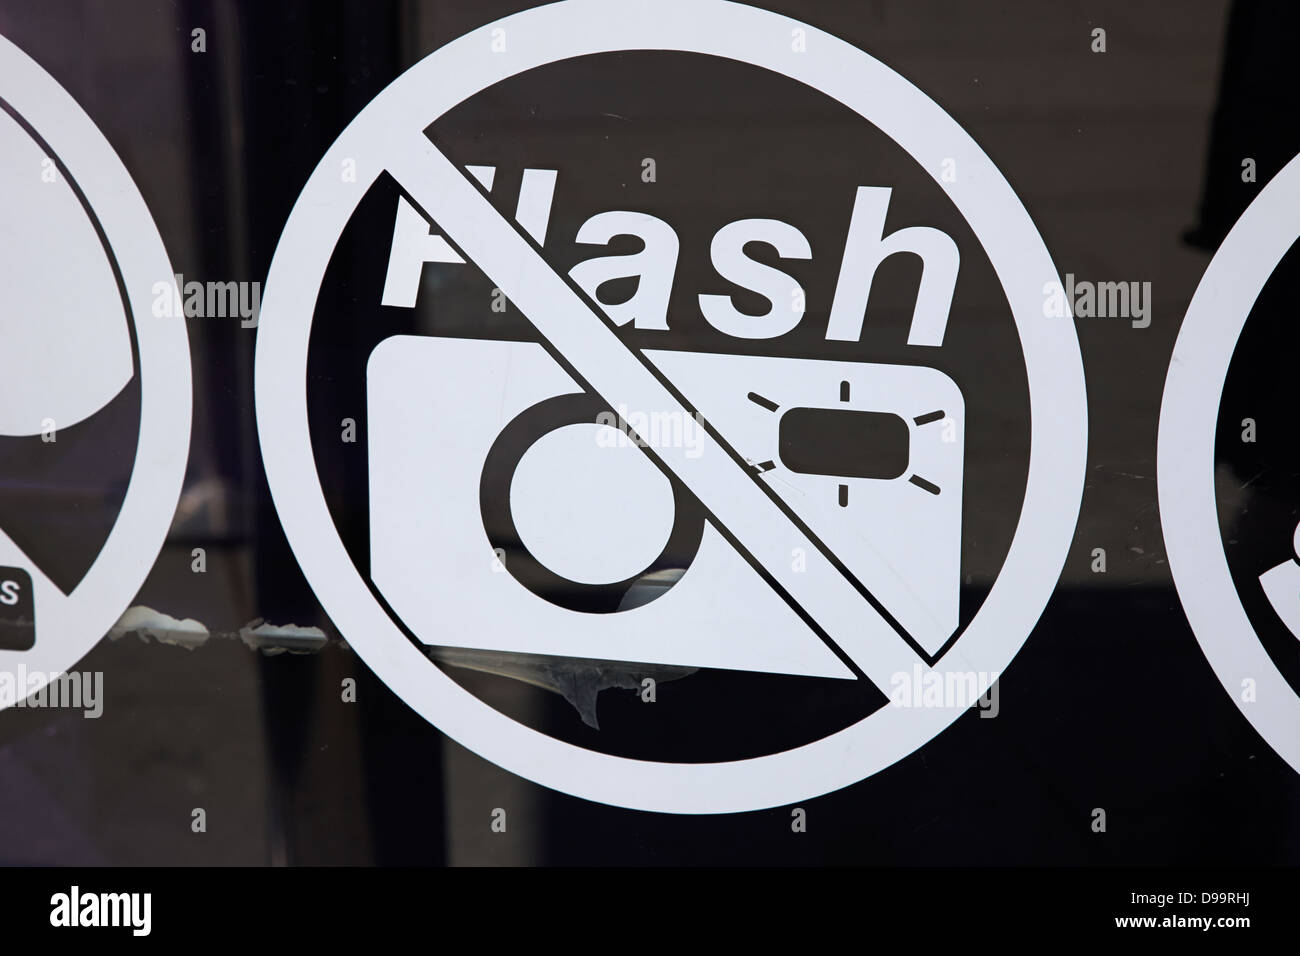 no flash photography sign Stock Photo